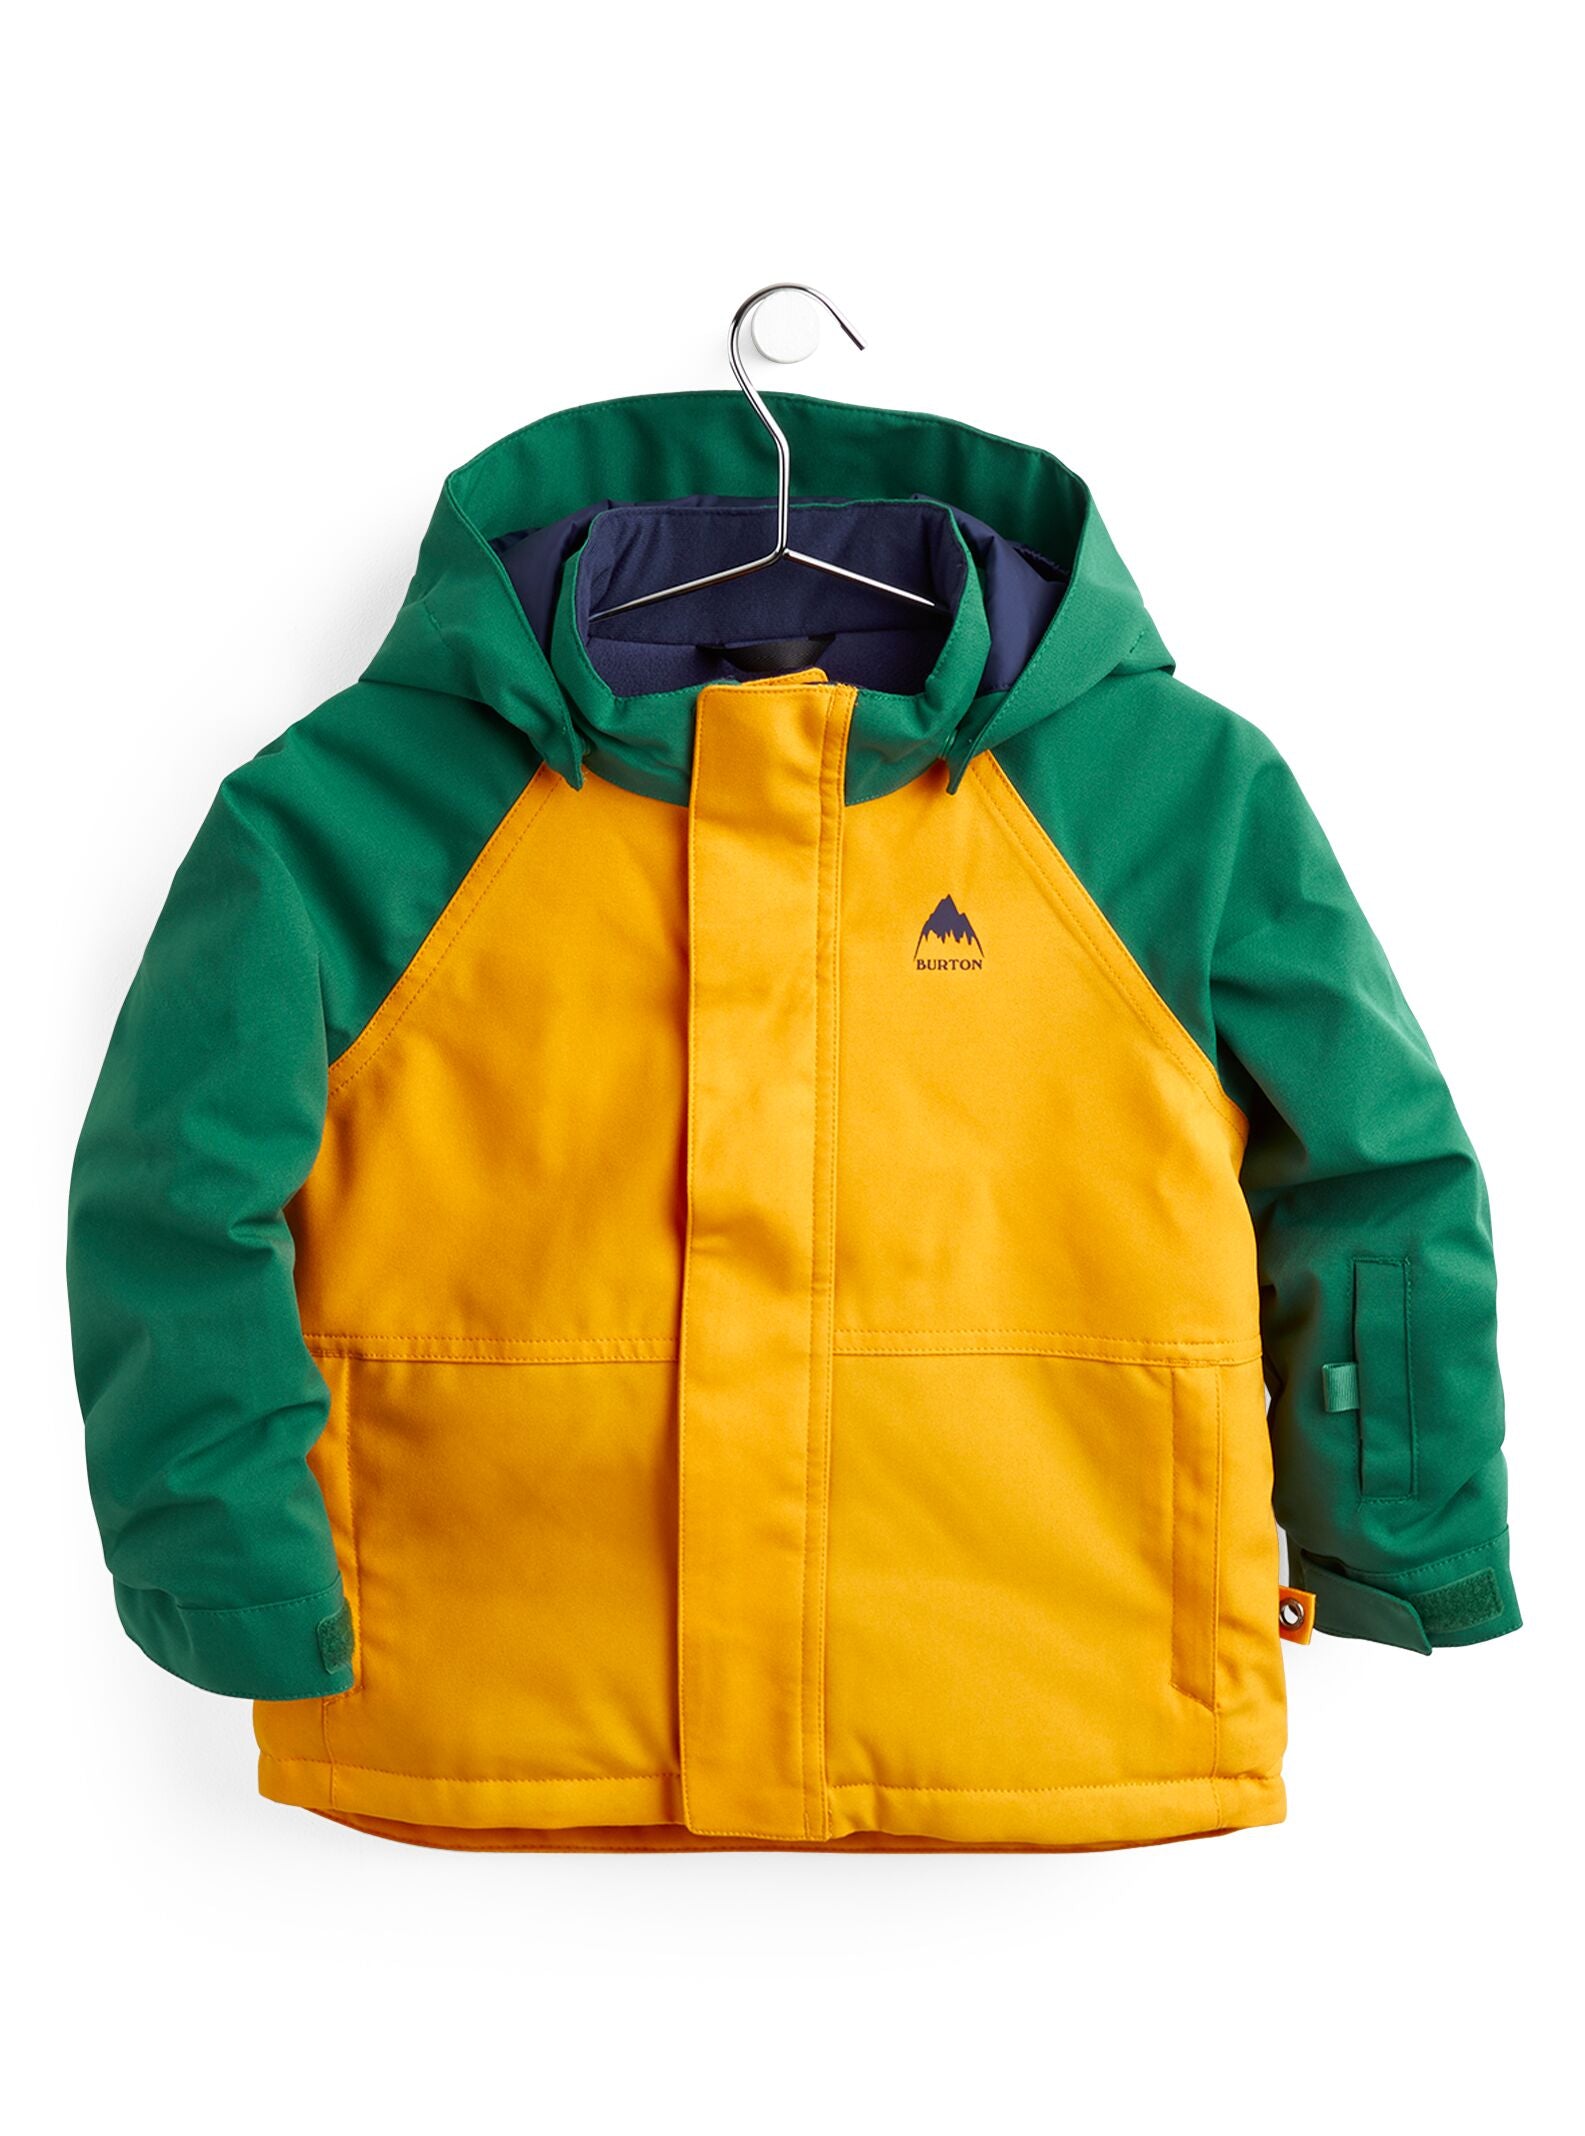 Toddlers Classic Jacket - Cadmium Yellow/Fir Green